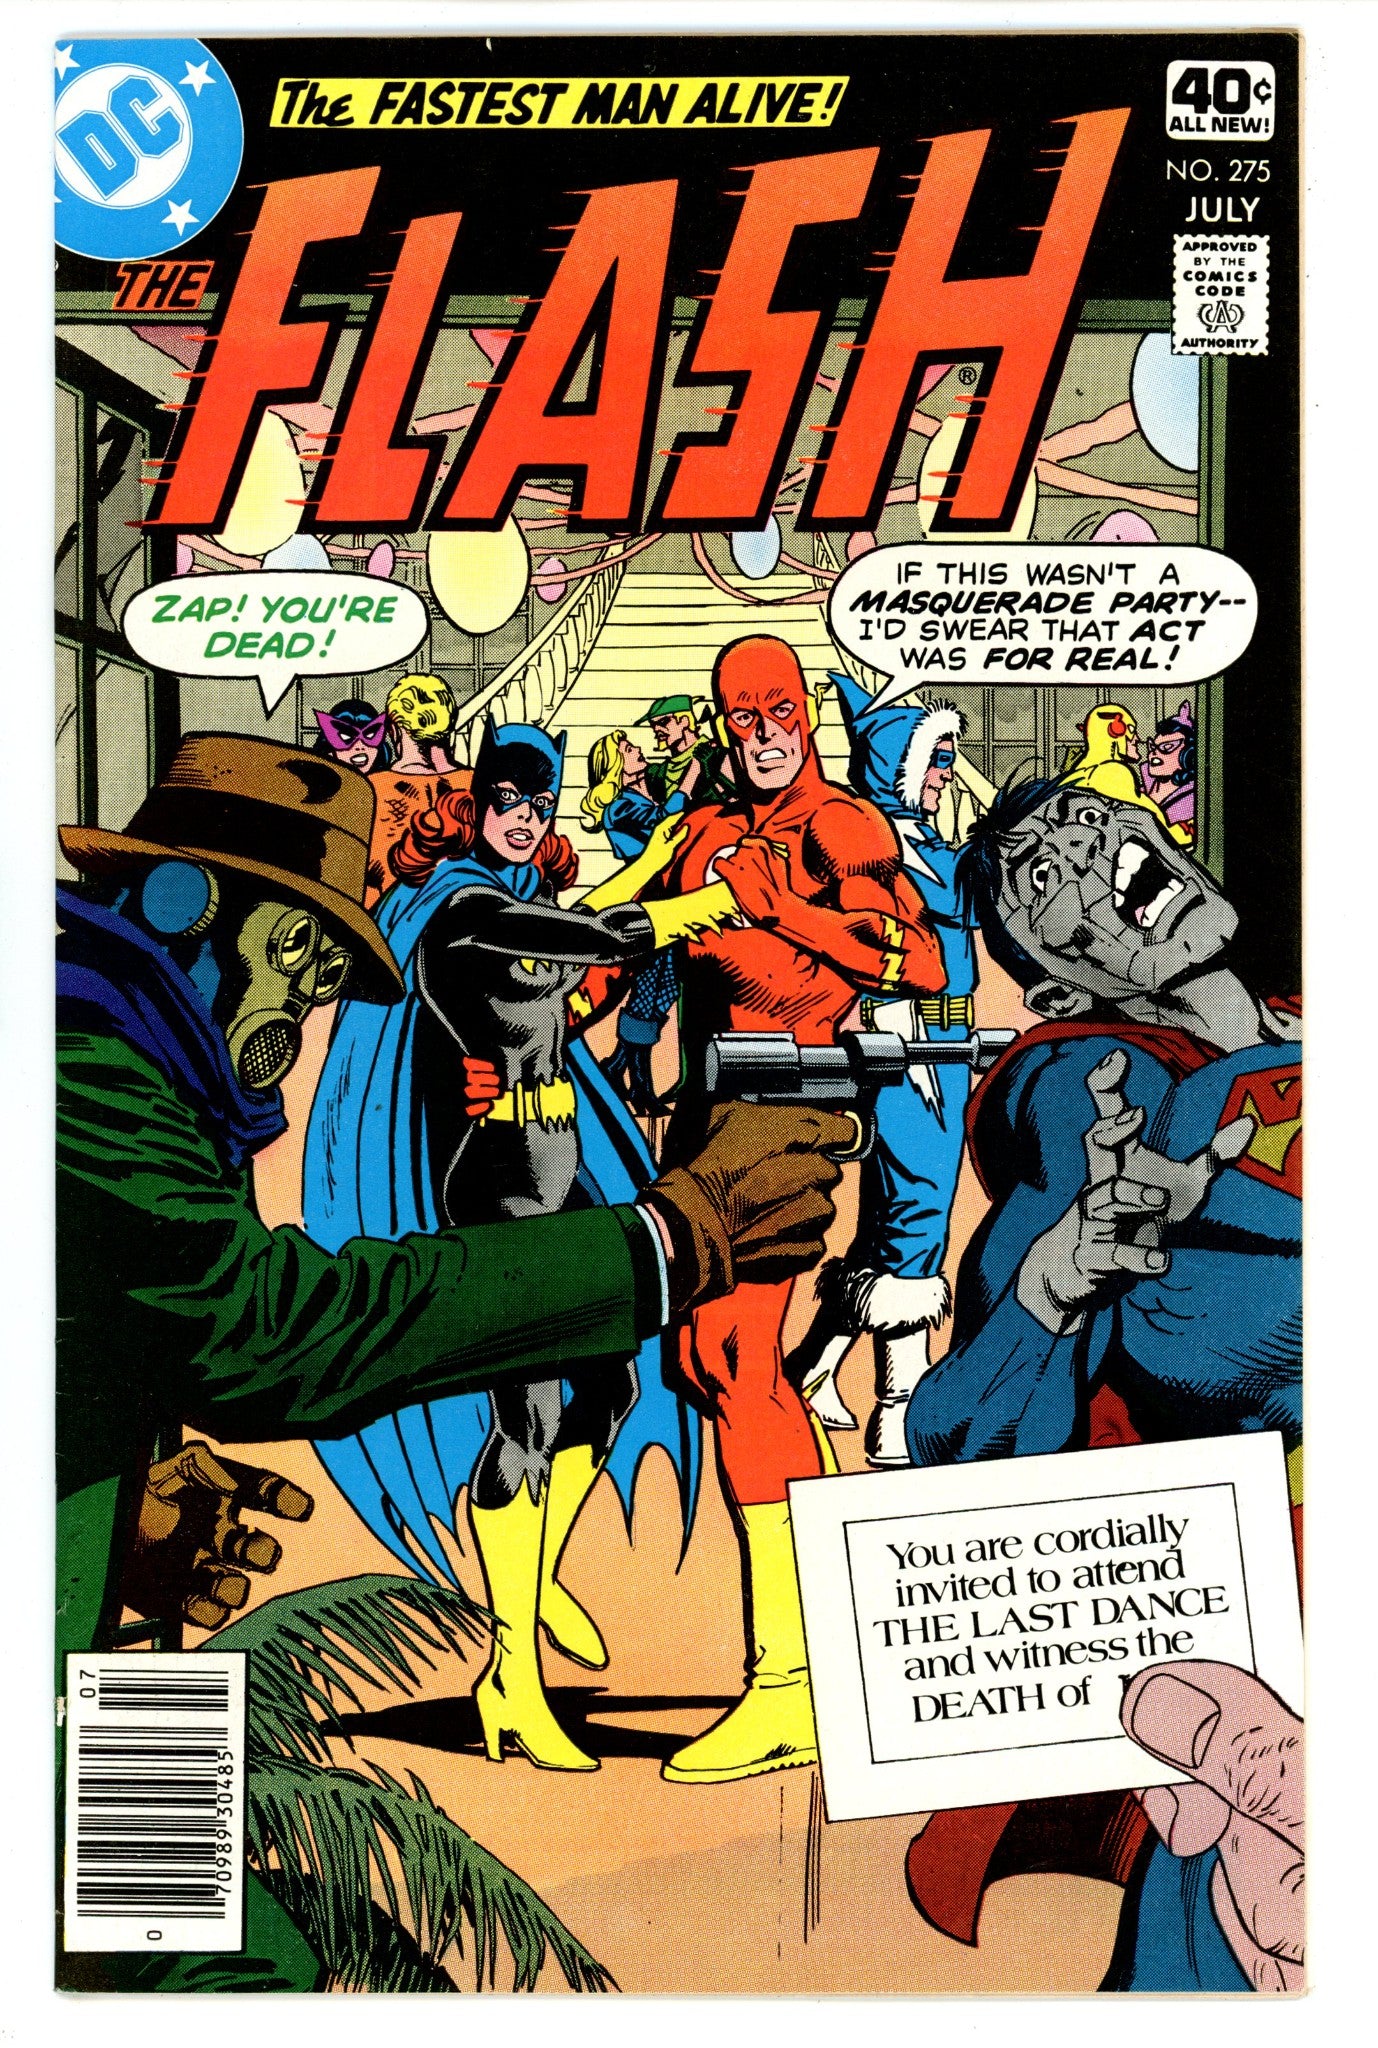 The Flash Vol 1 275 FN- (5.5) (1979) 